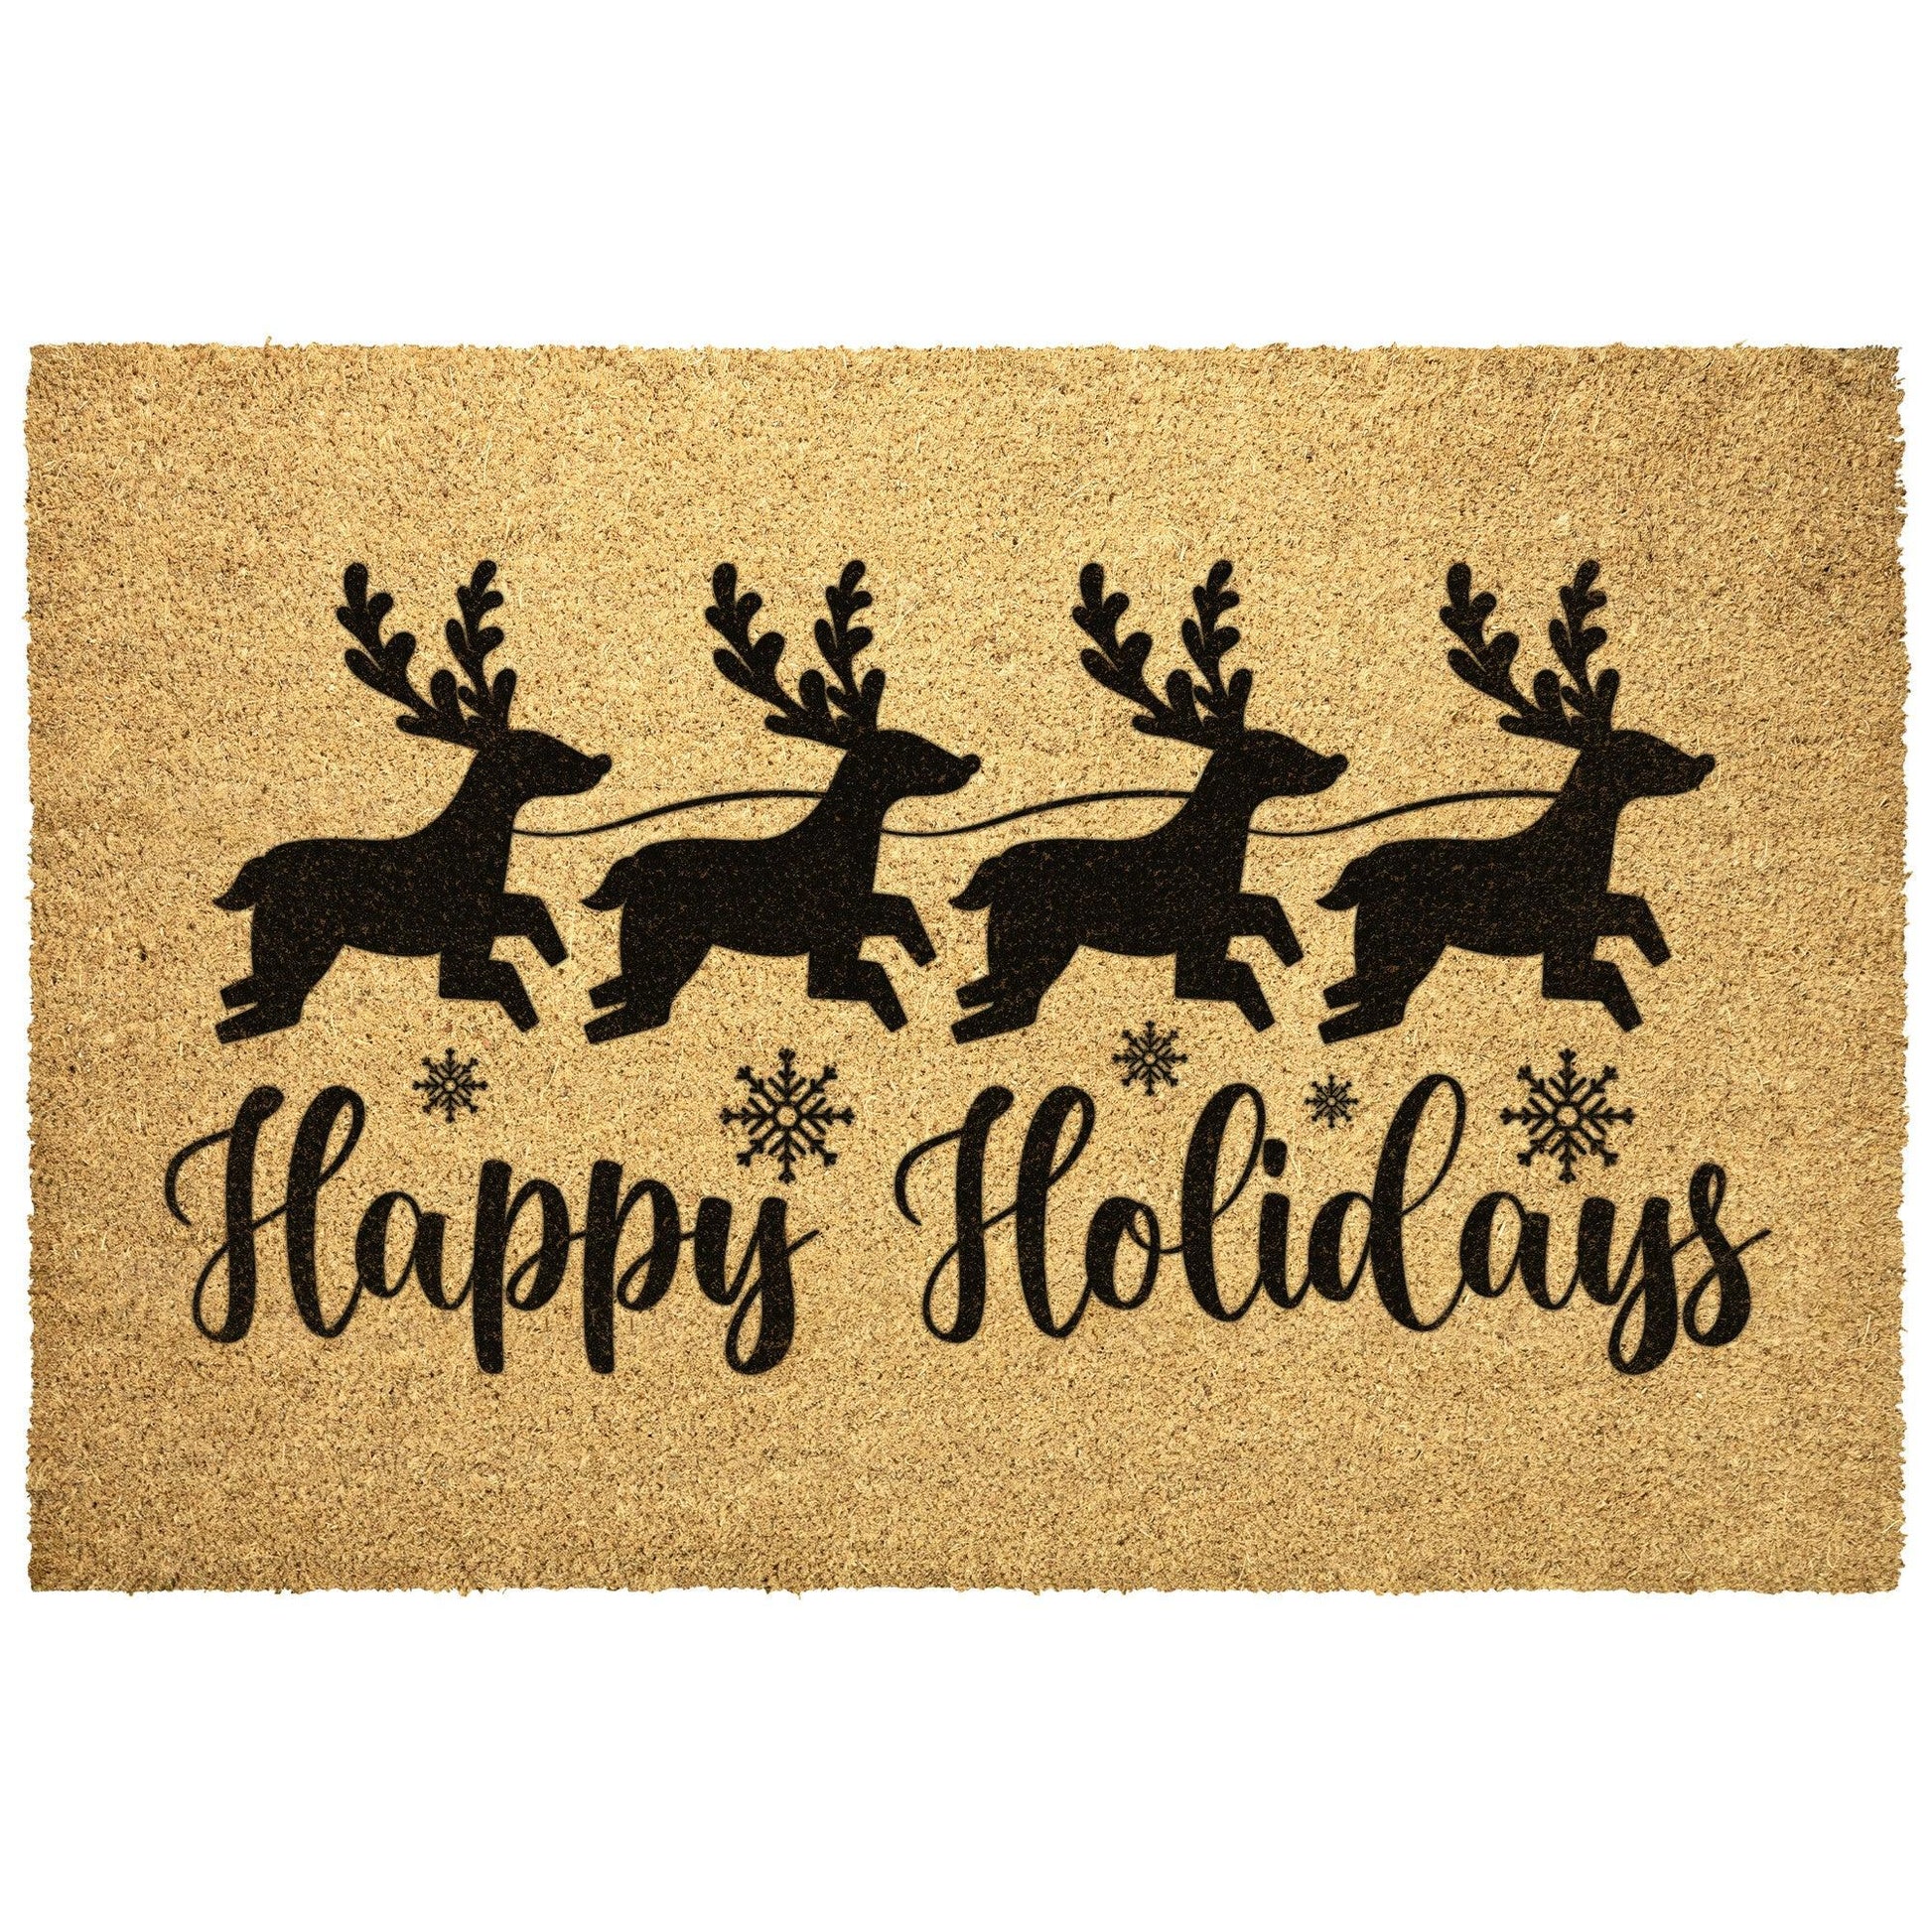 Happy Holidays Reindeer Outdoor Mat - Mallard Moon Gift Shop